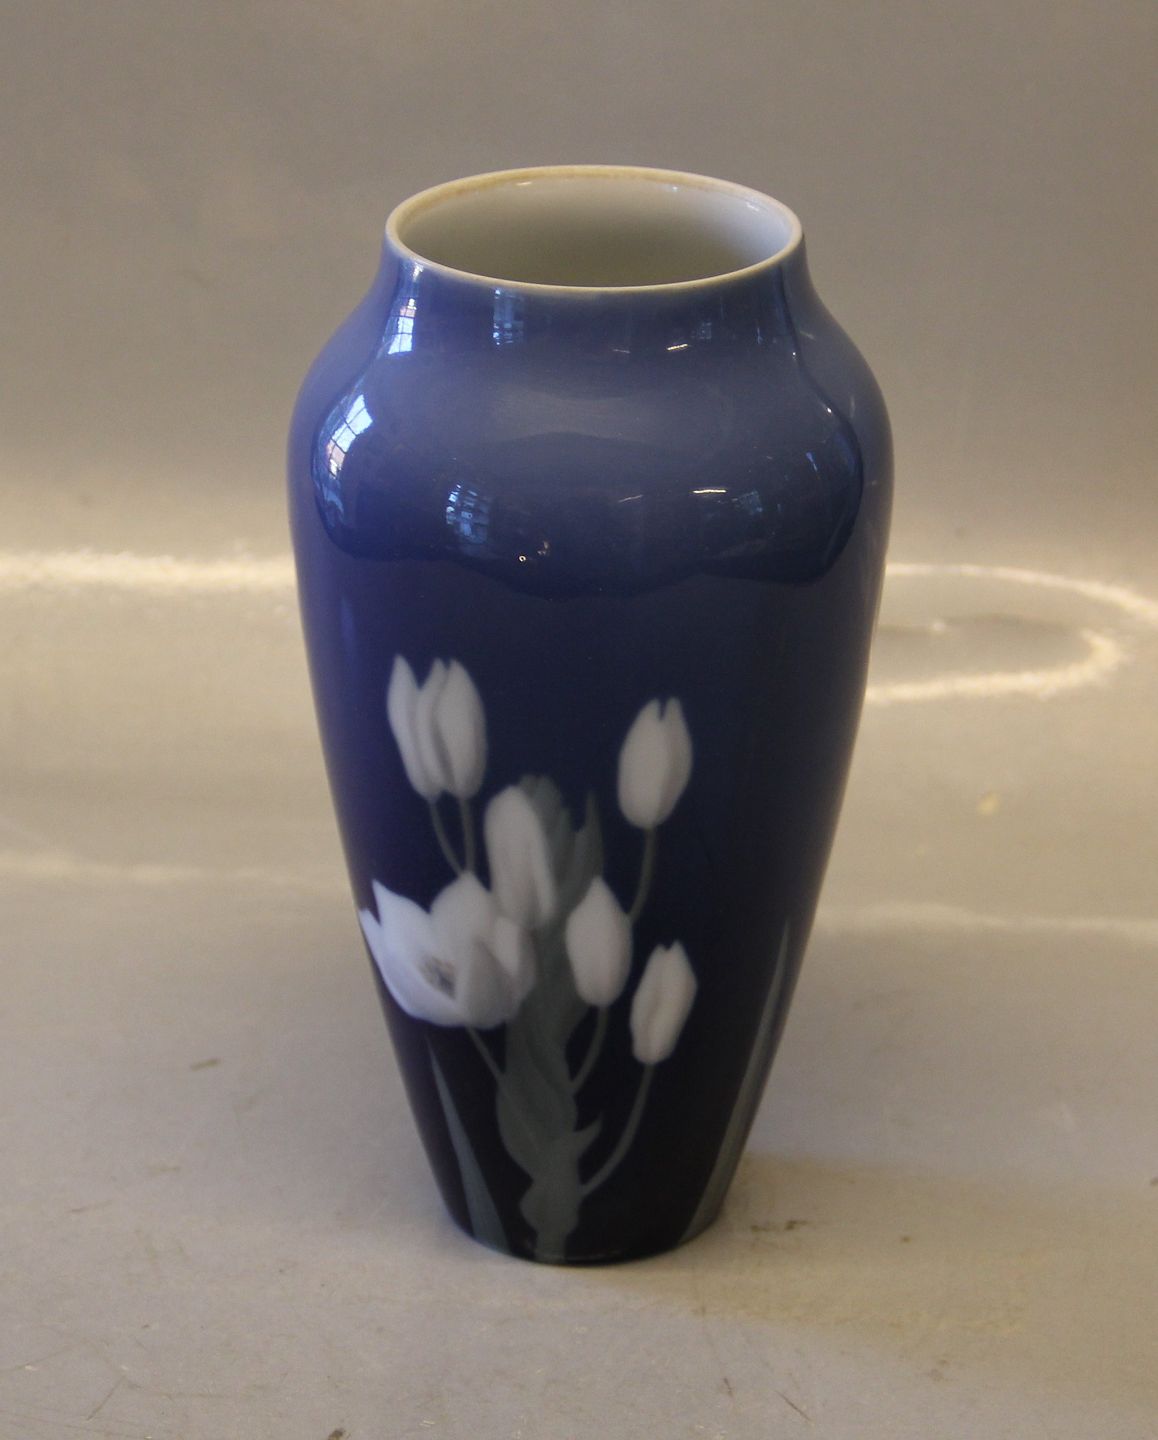 Klosterkælderen - B&G Porcelain B&G 4256-45 Royal Blue vase 17 cm Decorated with snowdrop - B&G Porcelain B&G 4256-45 Royal Blue vase 17 cm Decorated snowdrop